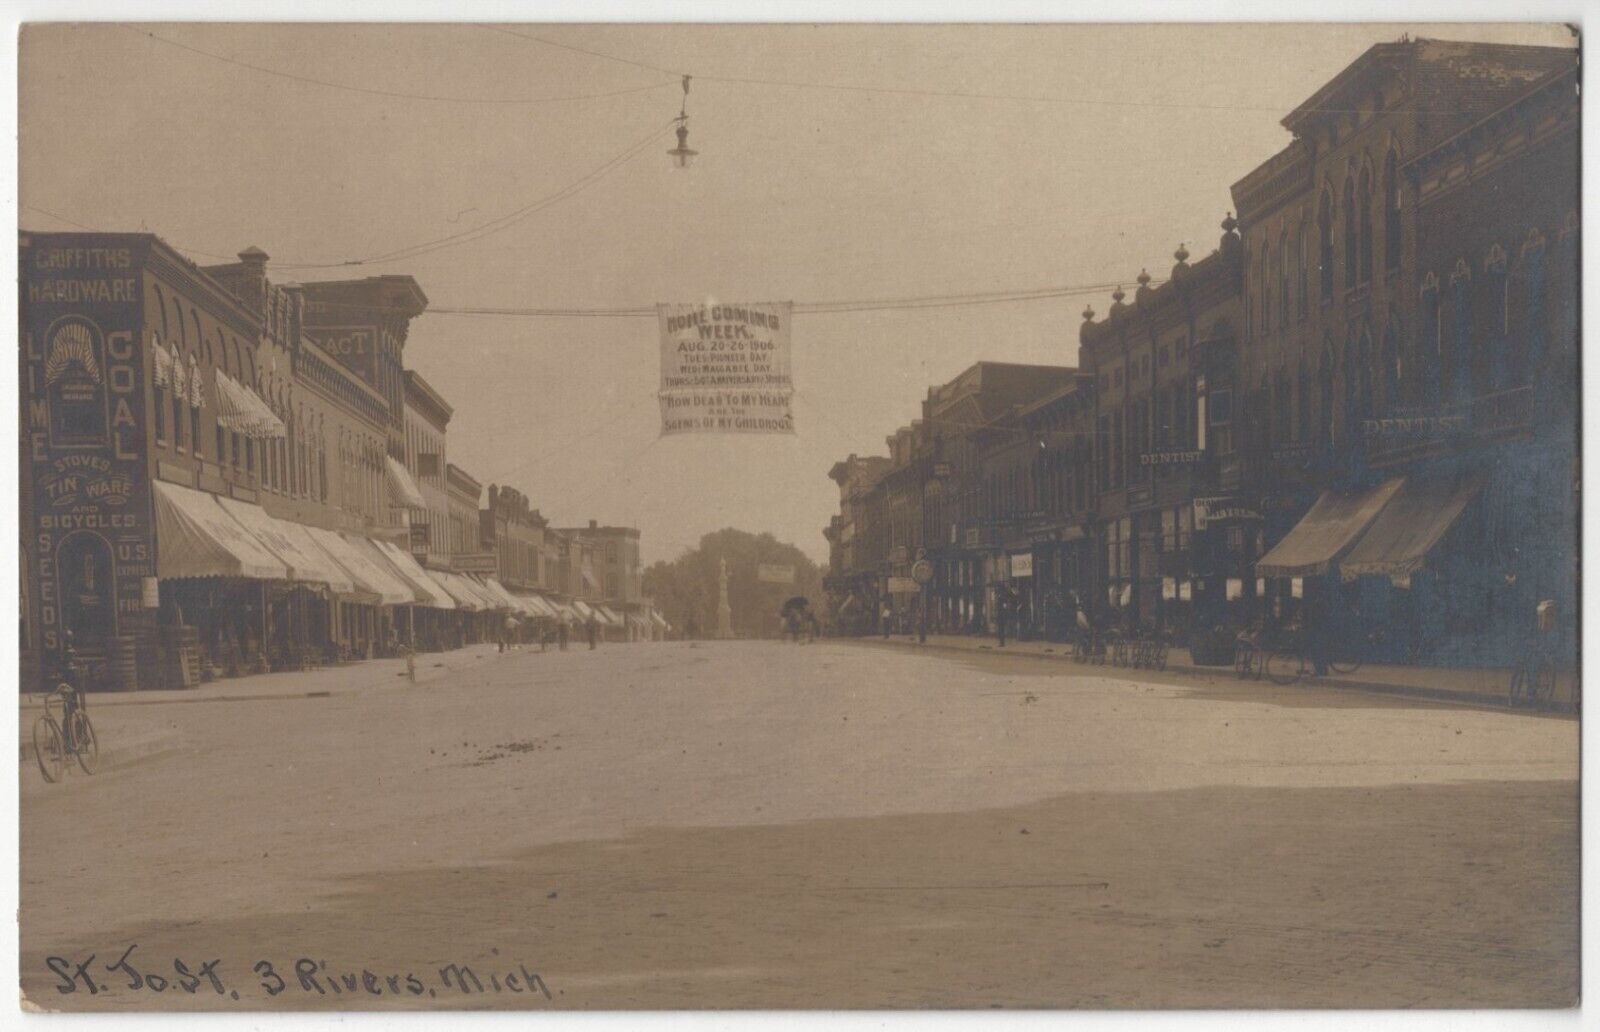 1906 Three Rivers, Michigan - REAL PHOTO Main Street - Vintage Postcard